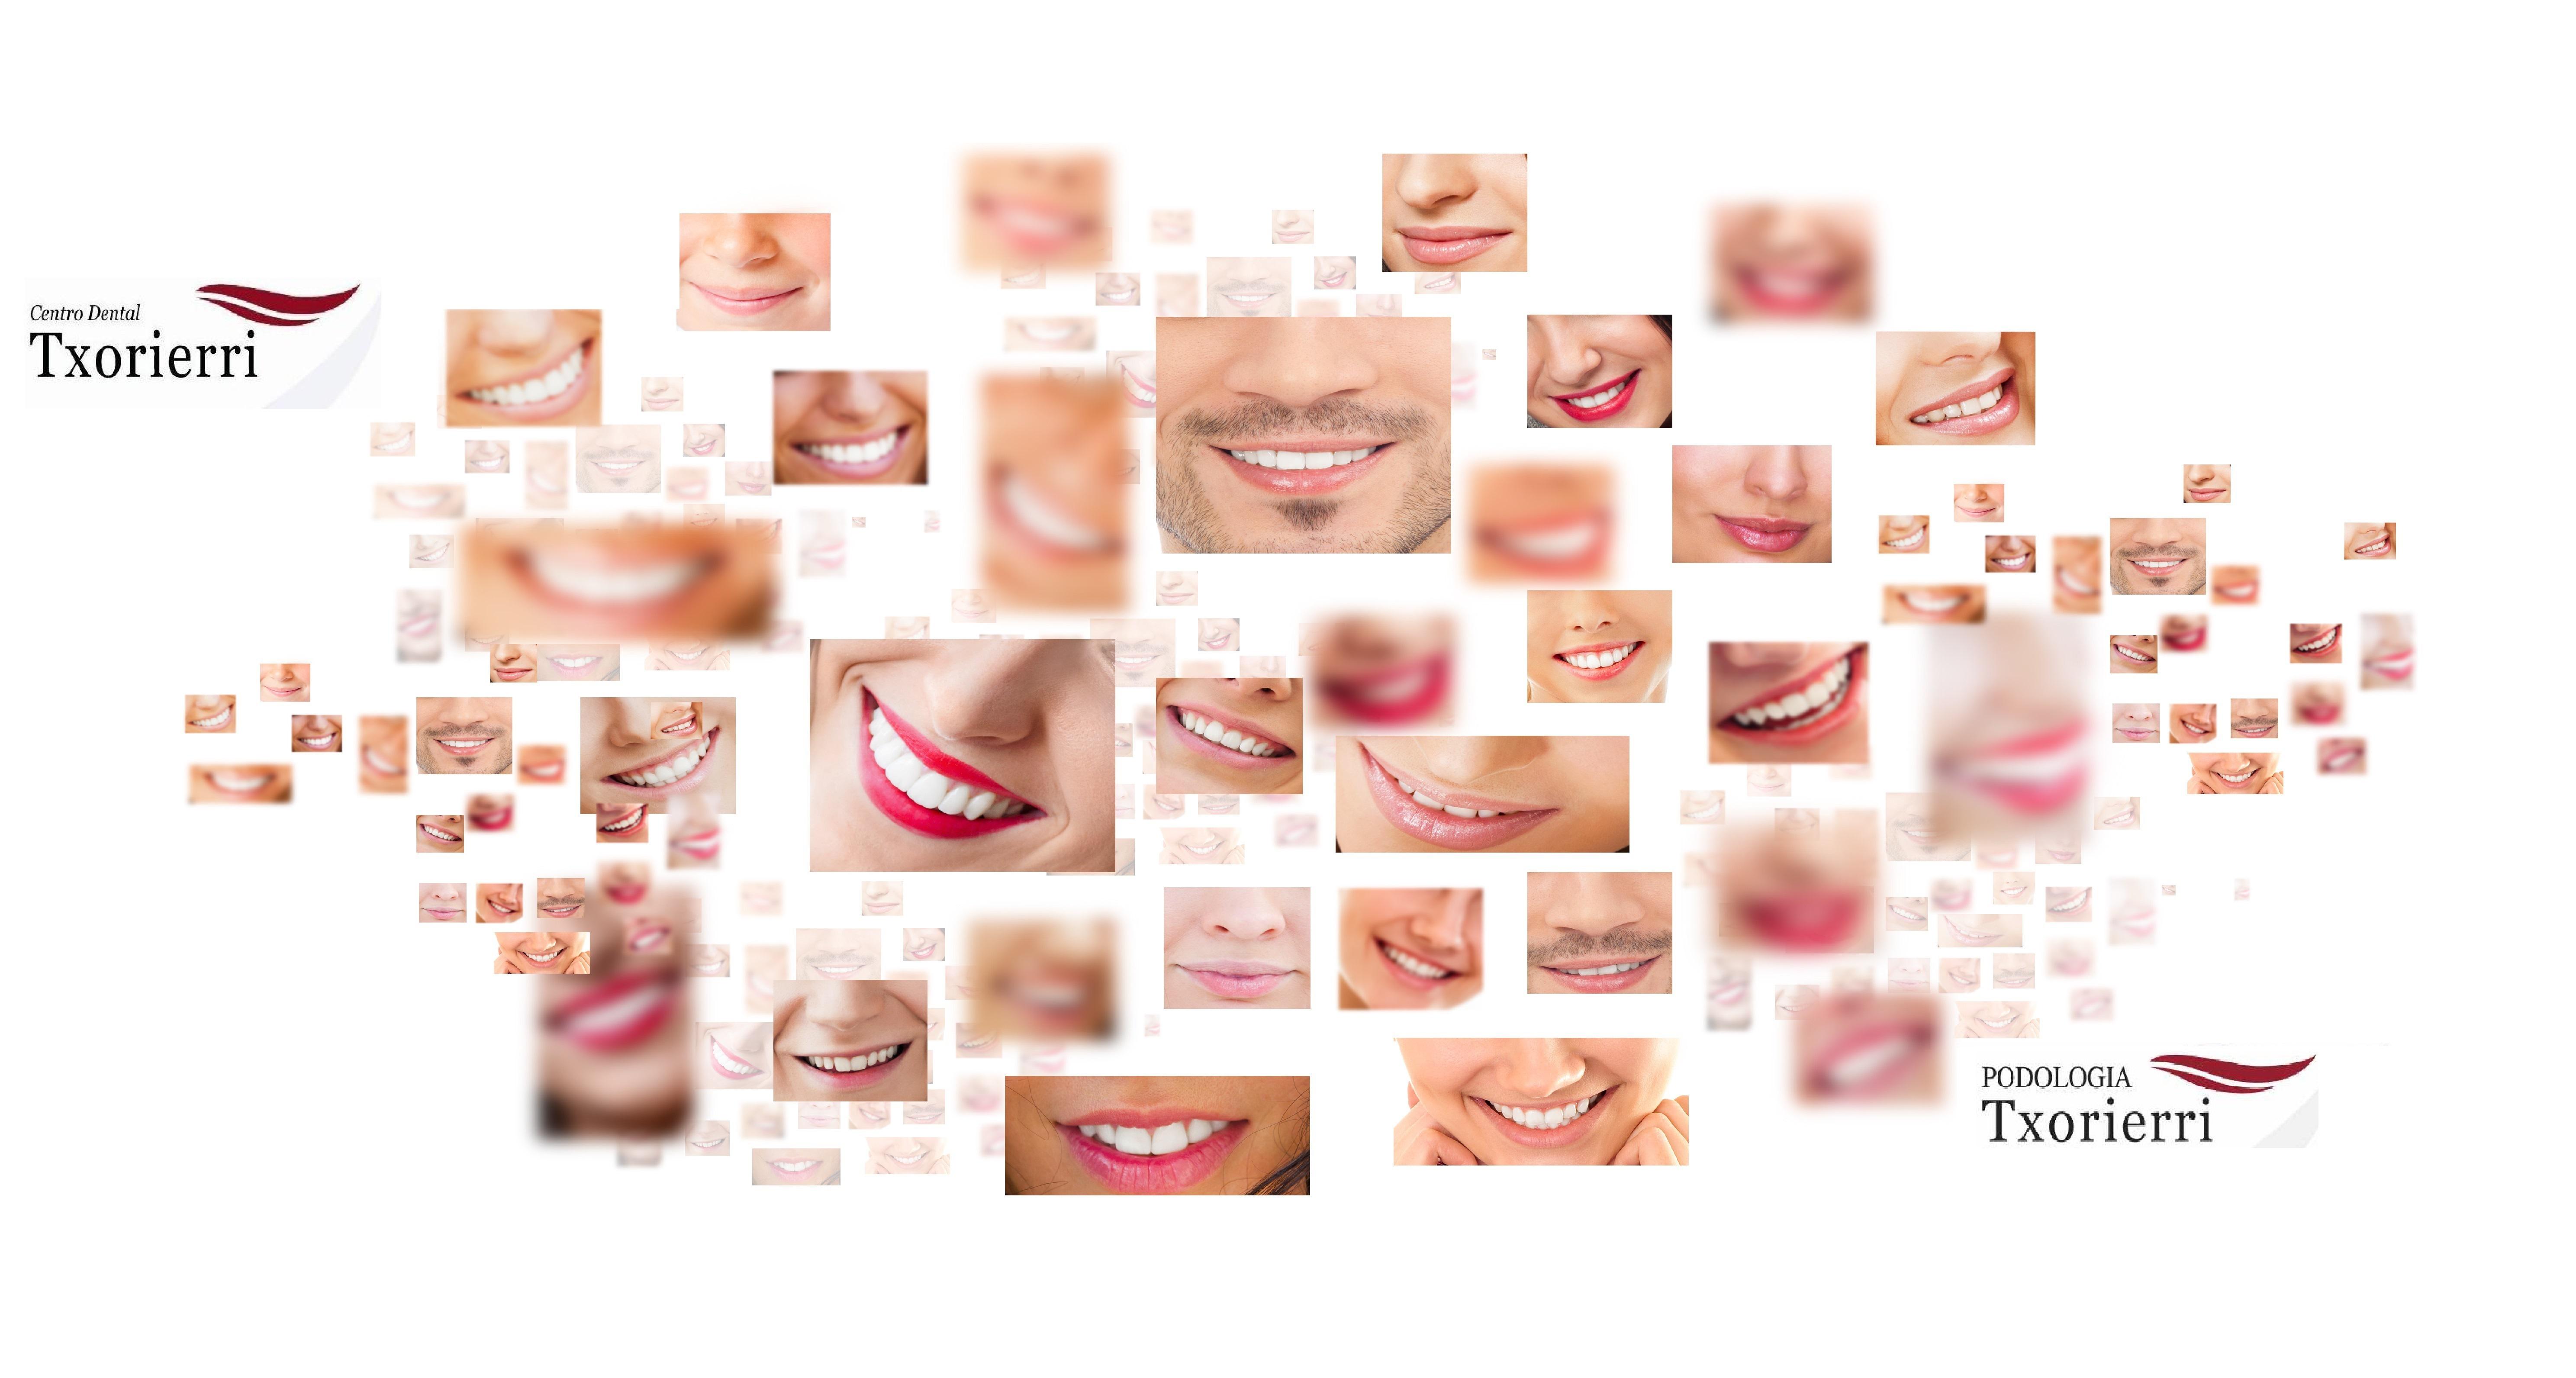 Images Clínica Dental Txorierri